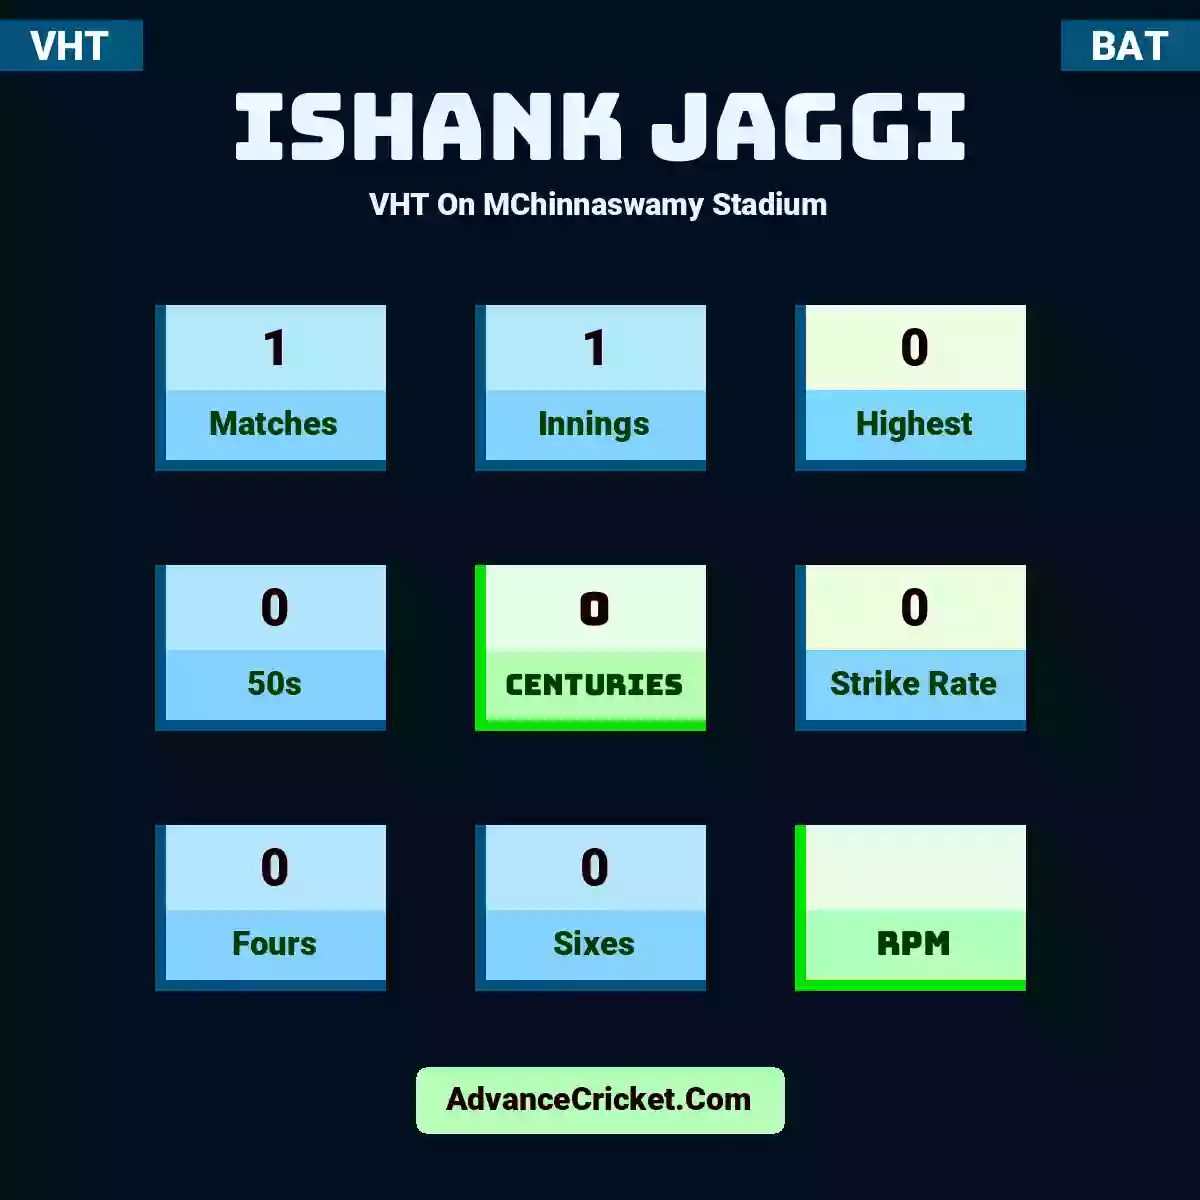 Ishank Jaggi VHT  On MChinnaswamy Stadium, Ishank Jaggi played 1 matches, scored 0 runs as highest, 0 half-centuries, and 0 centuries, with a strike rate of 0. I.Jaggi hit 0 fours and 0 sixes.